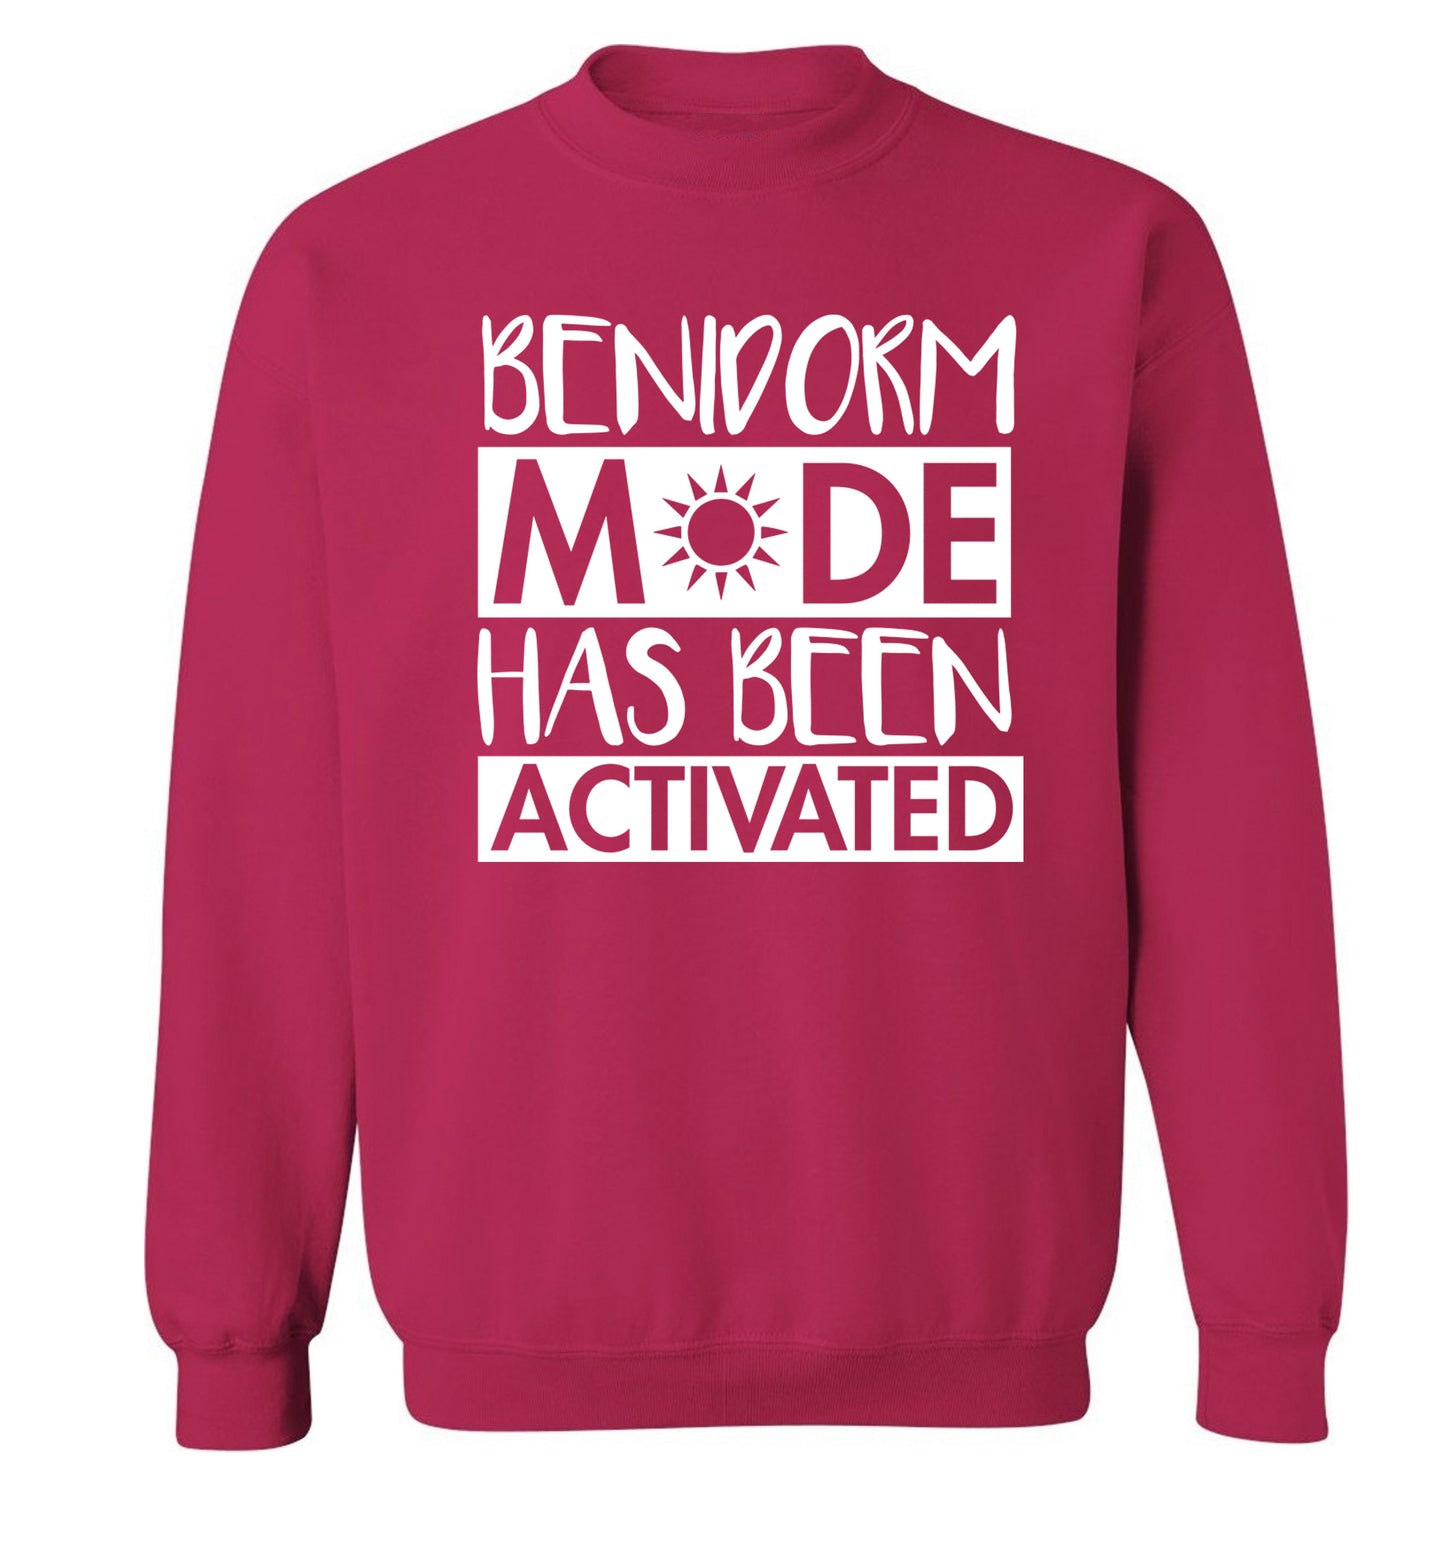 Benidorm mode has been activated Adult's unisex pink Sweater 2XL